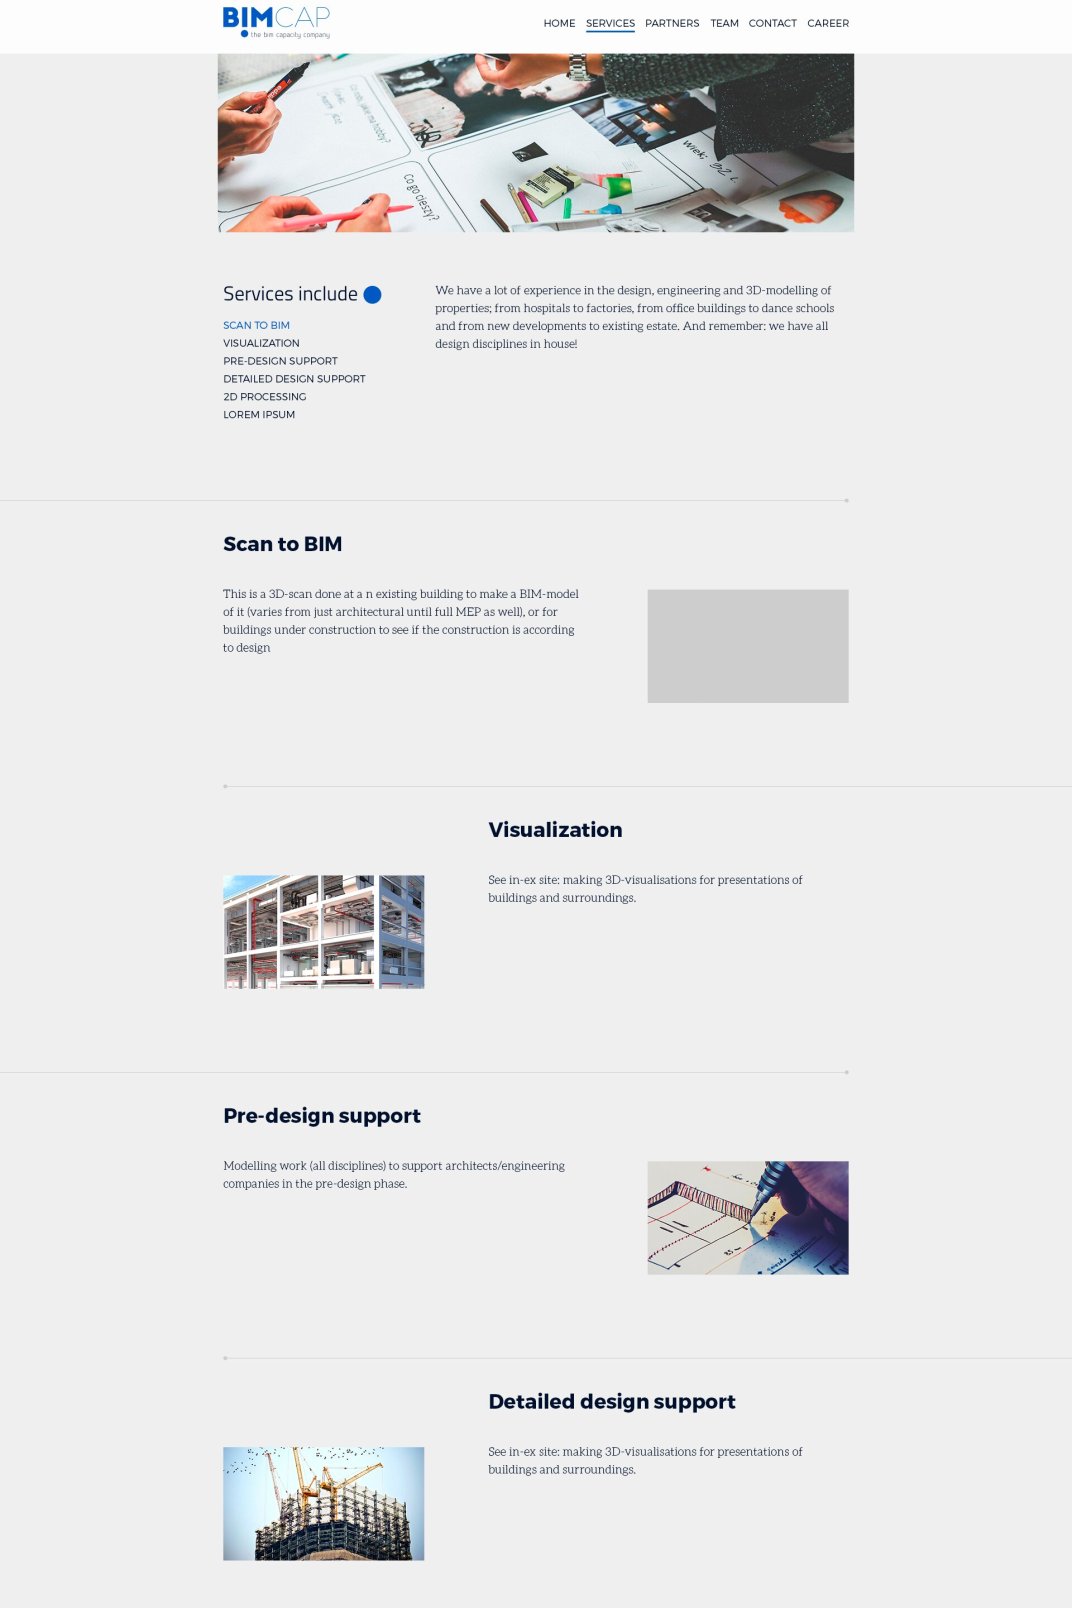  BIMCAP responsive web design services page screen 